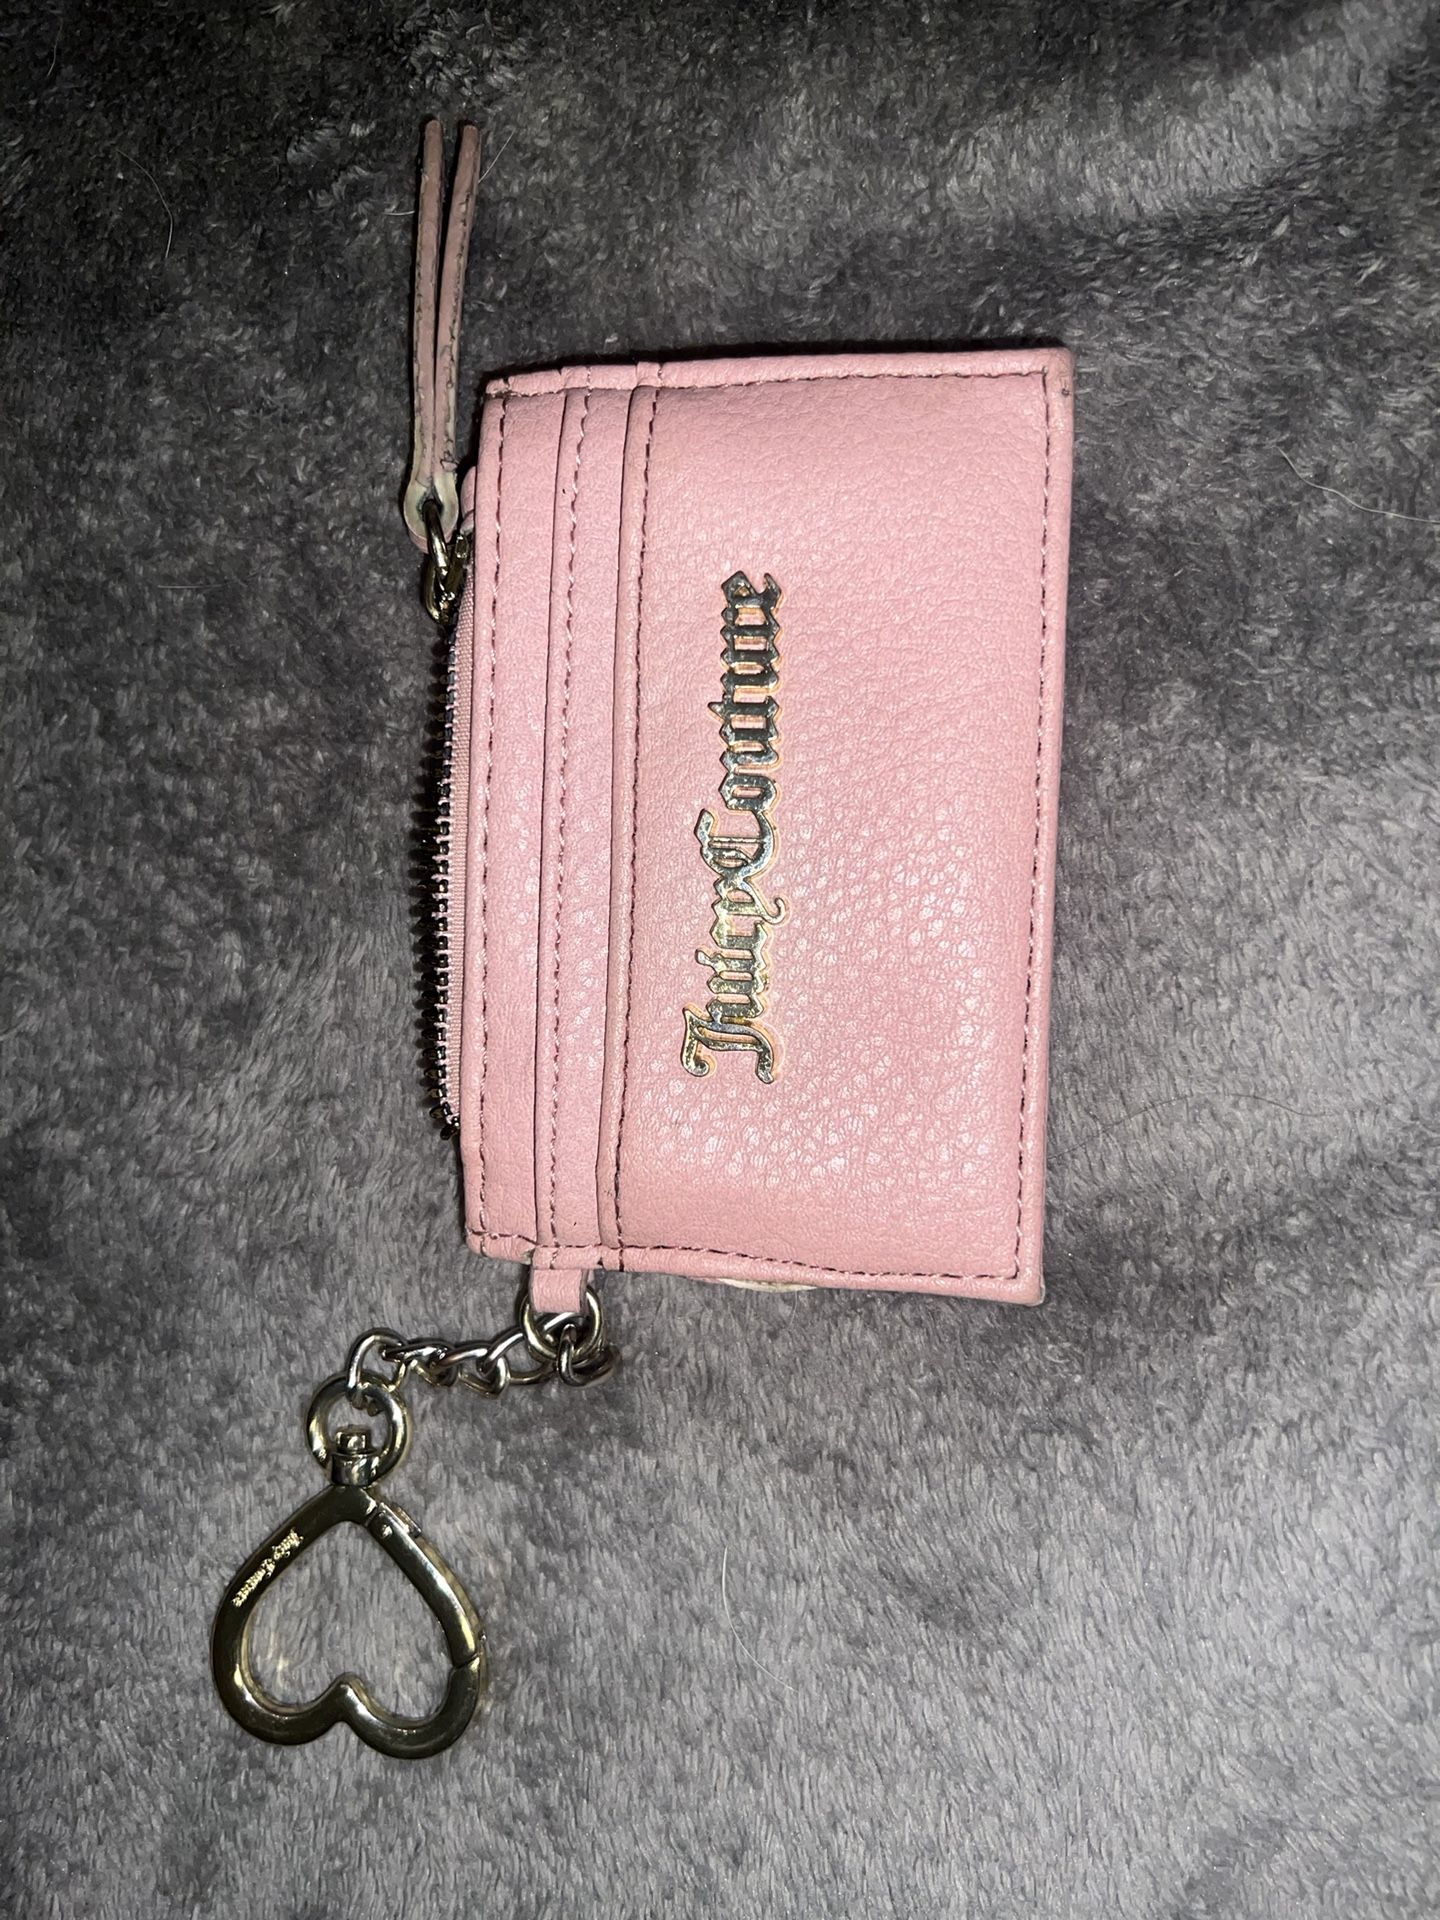 Pink Juicy Couture Wallet